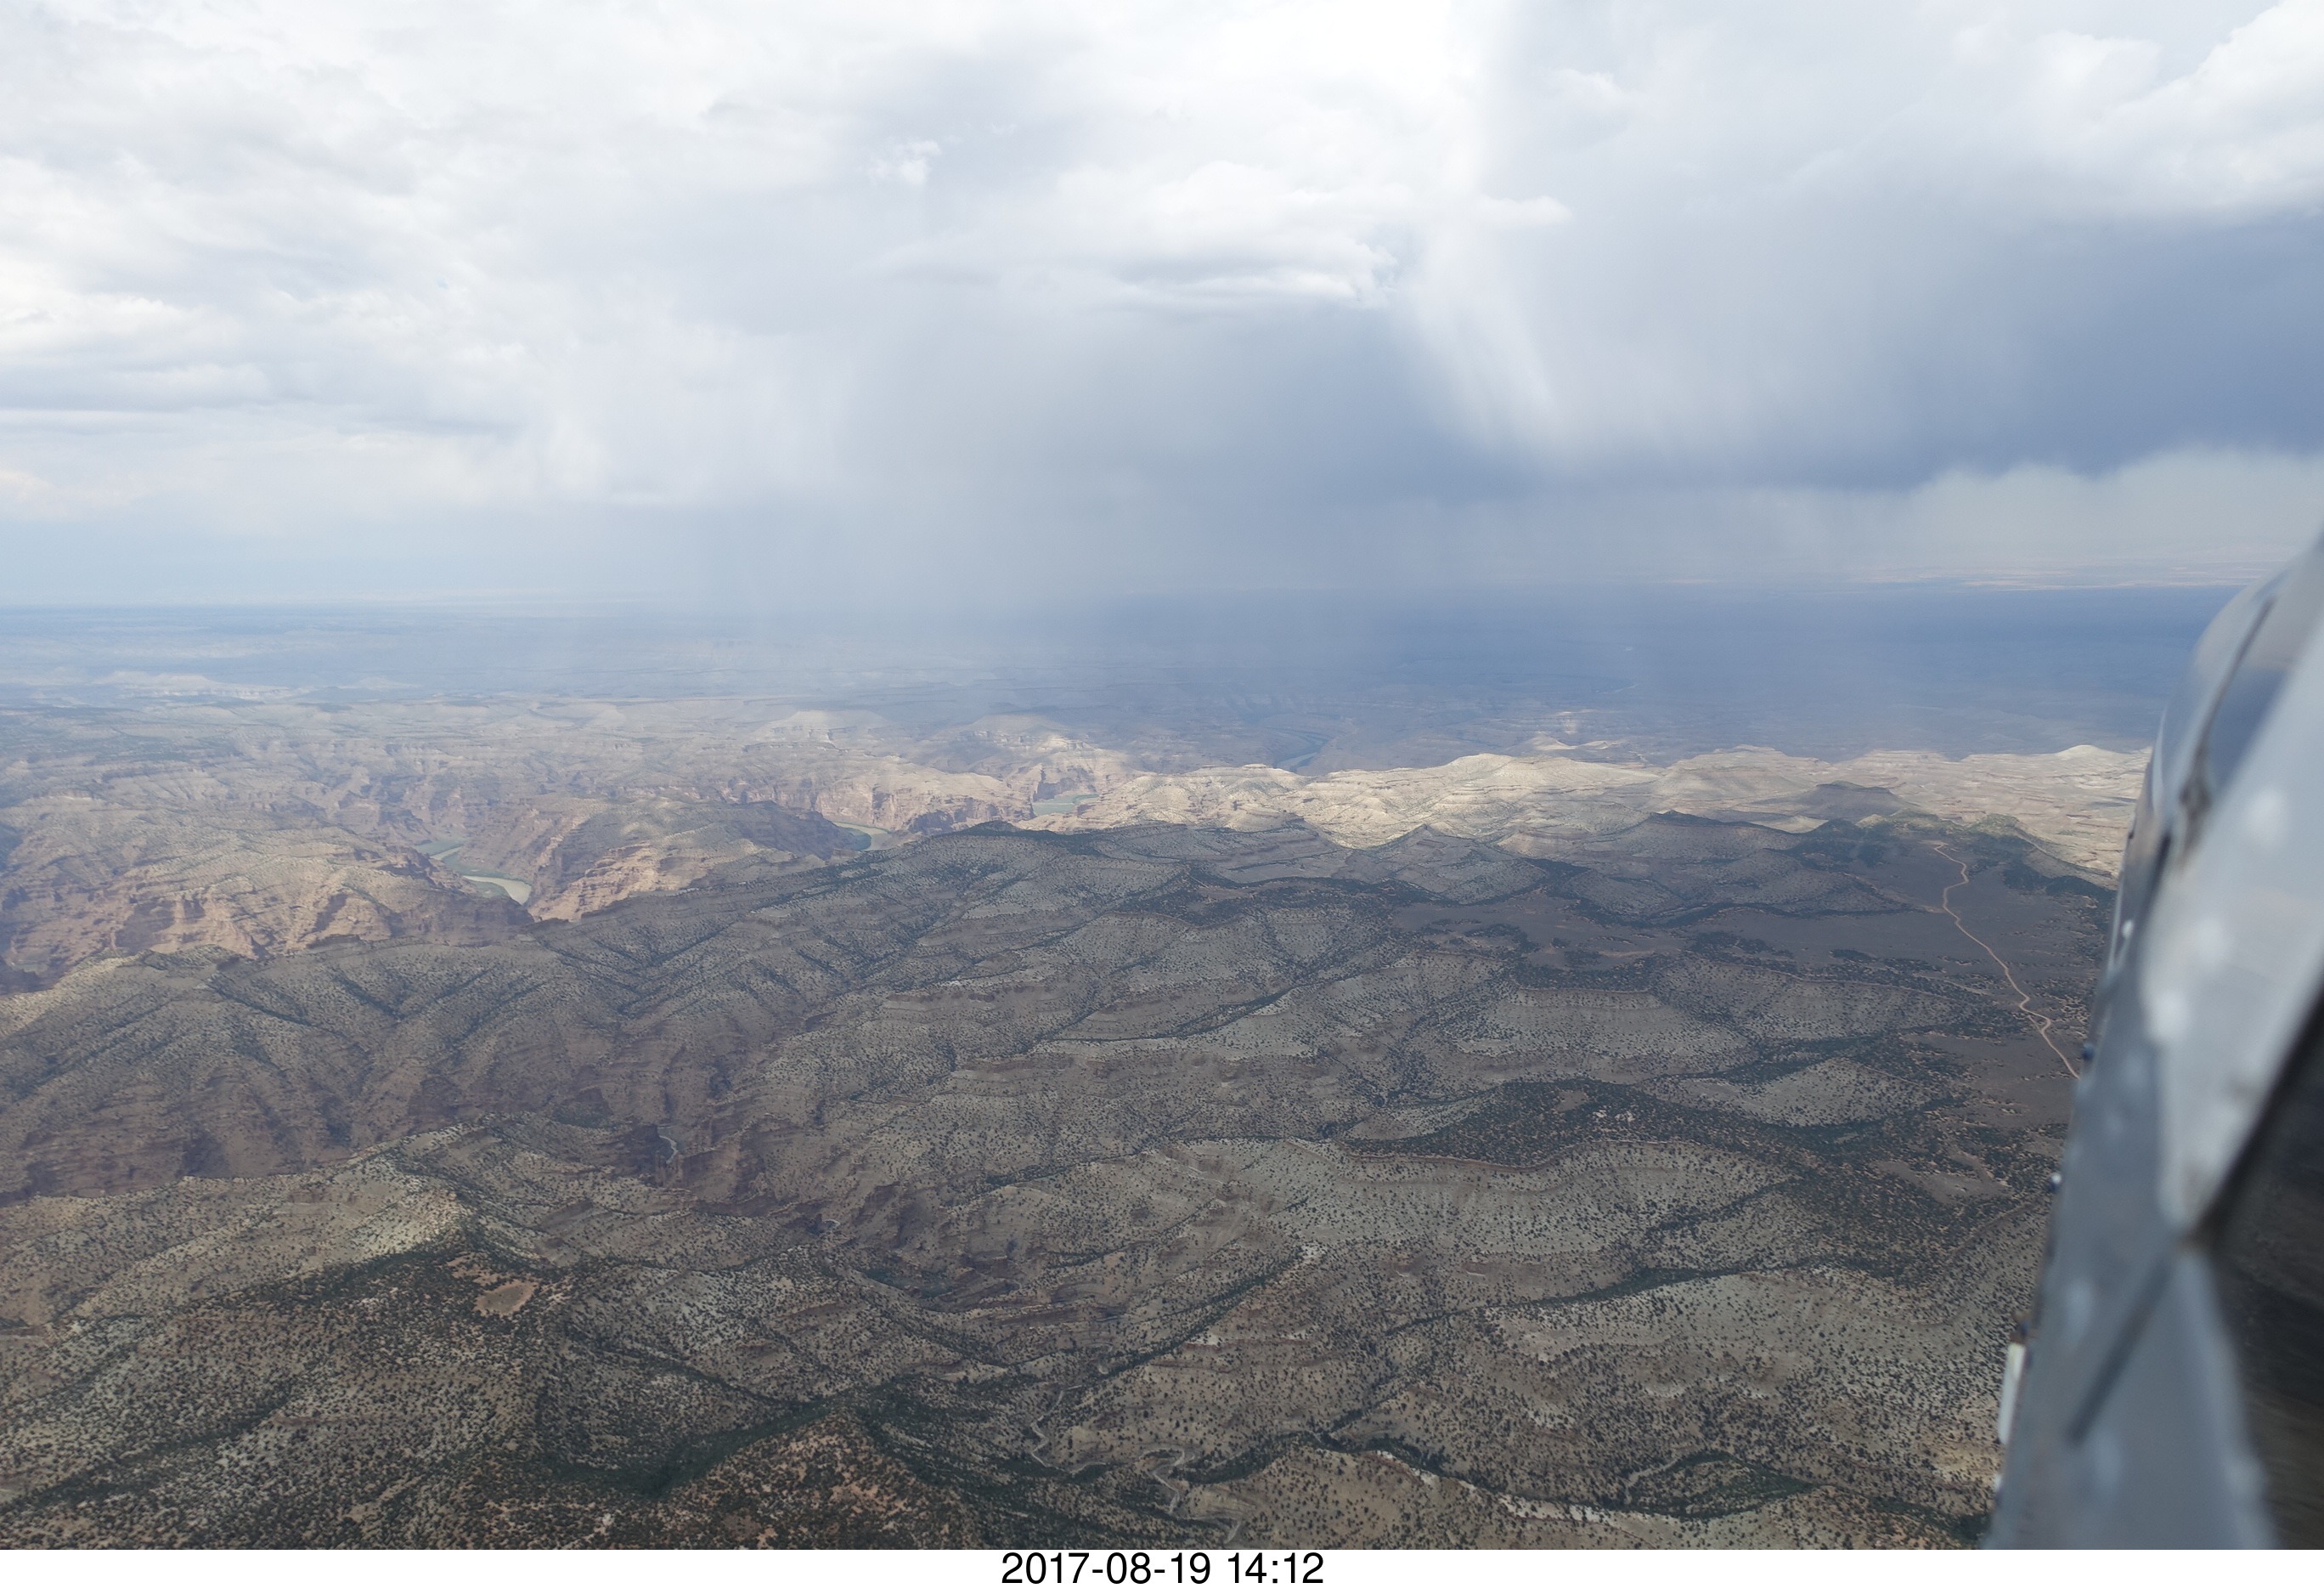 aerial - Book Cliffs - Desolation Canyon - clouds